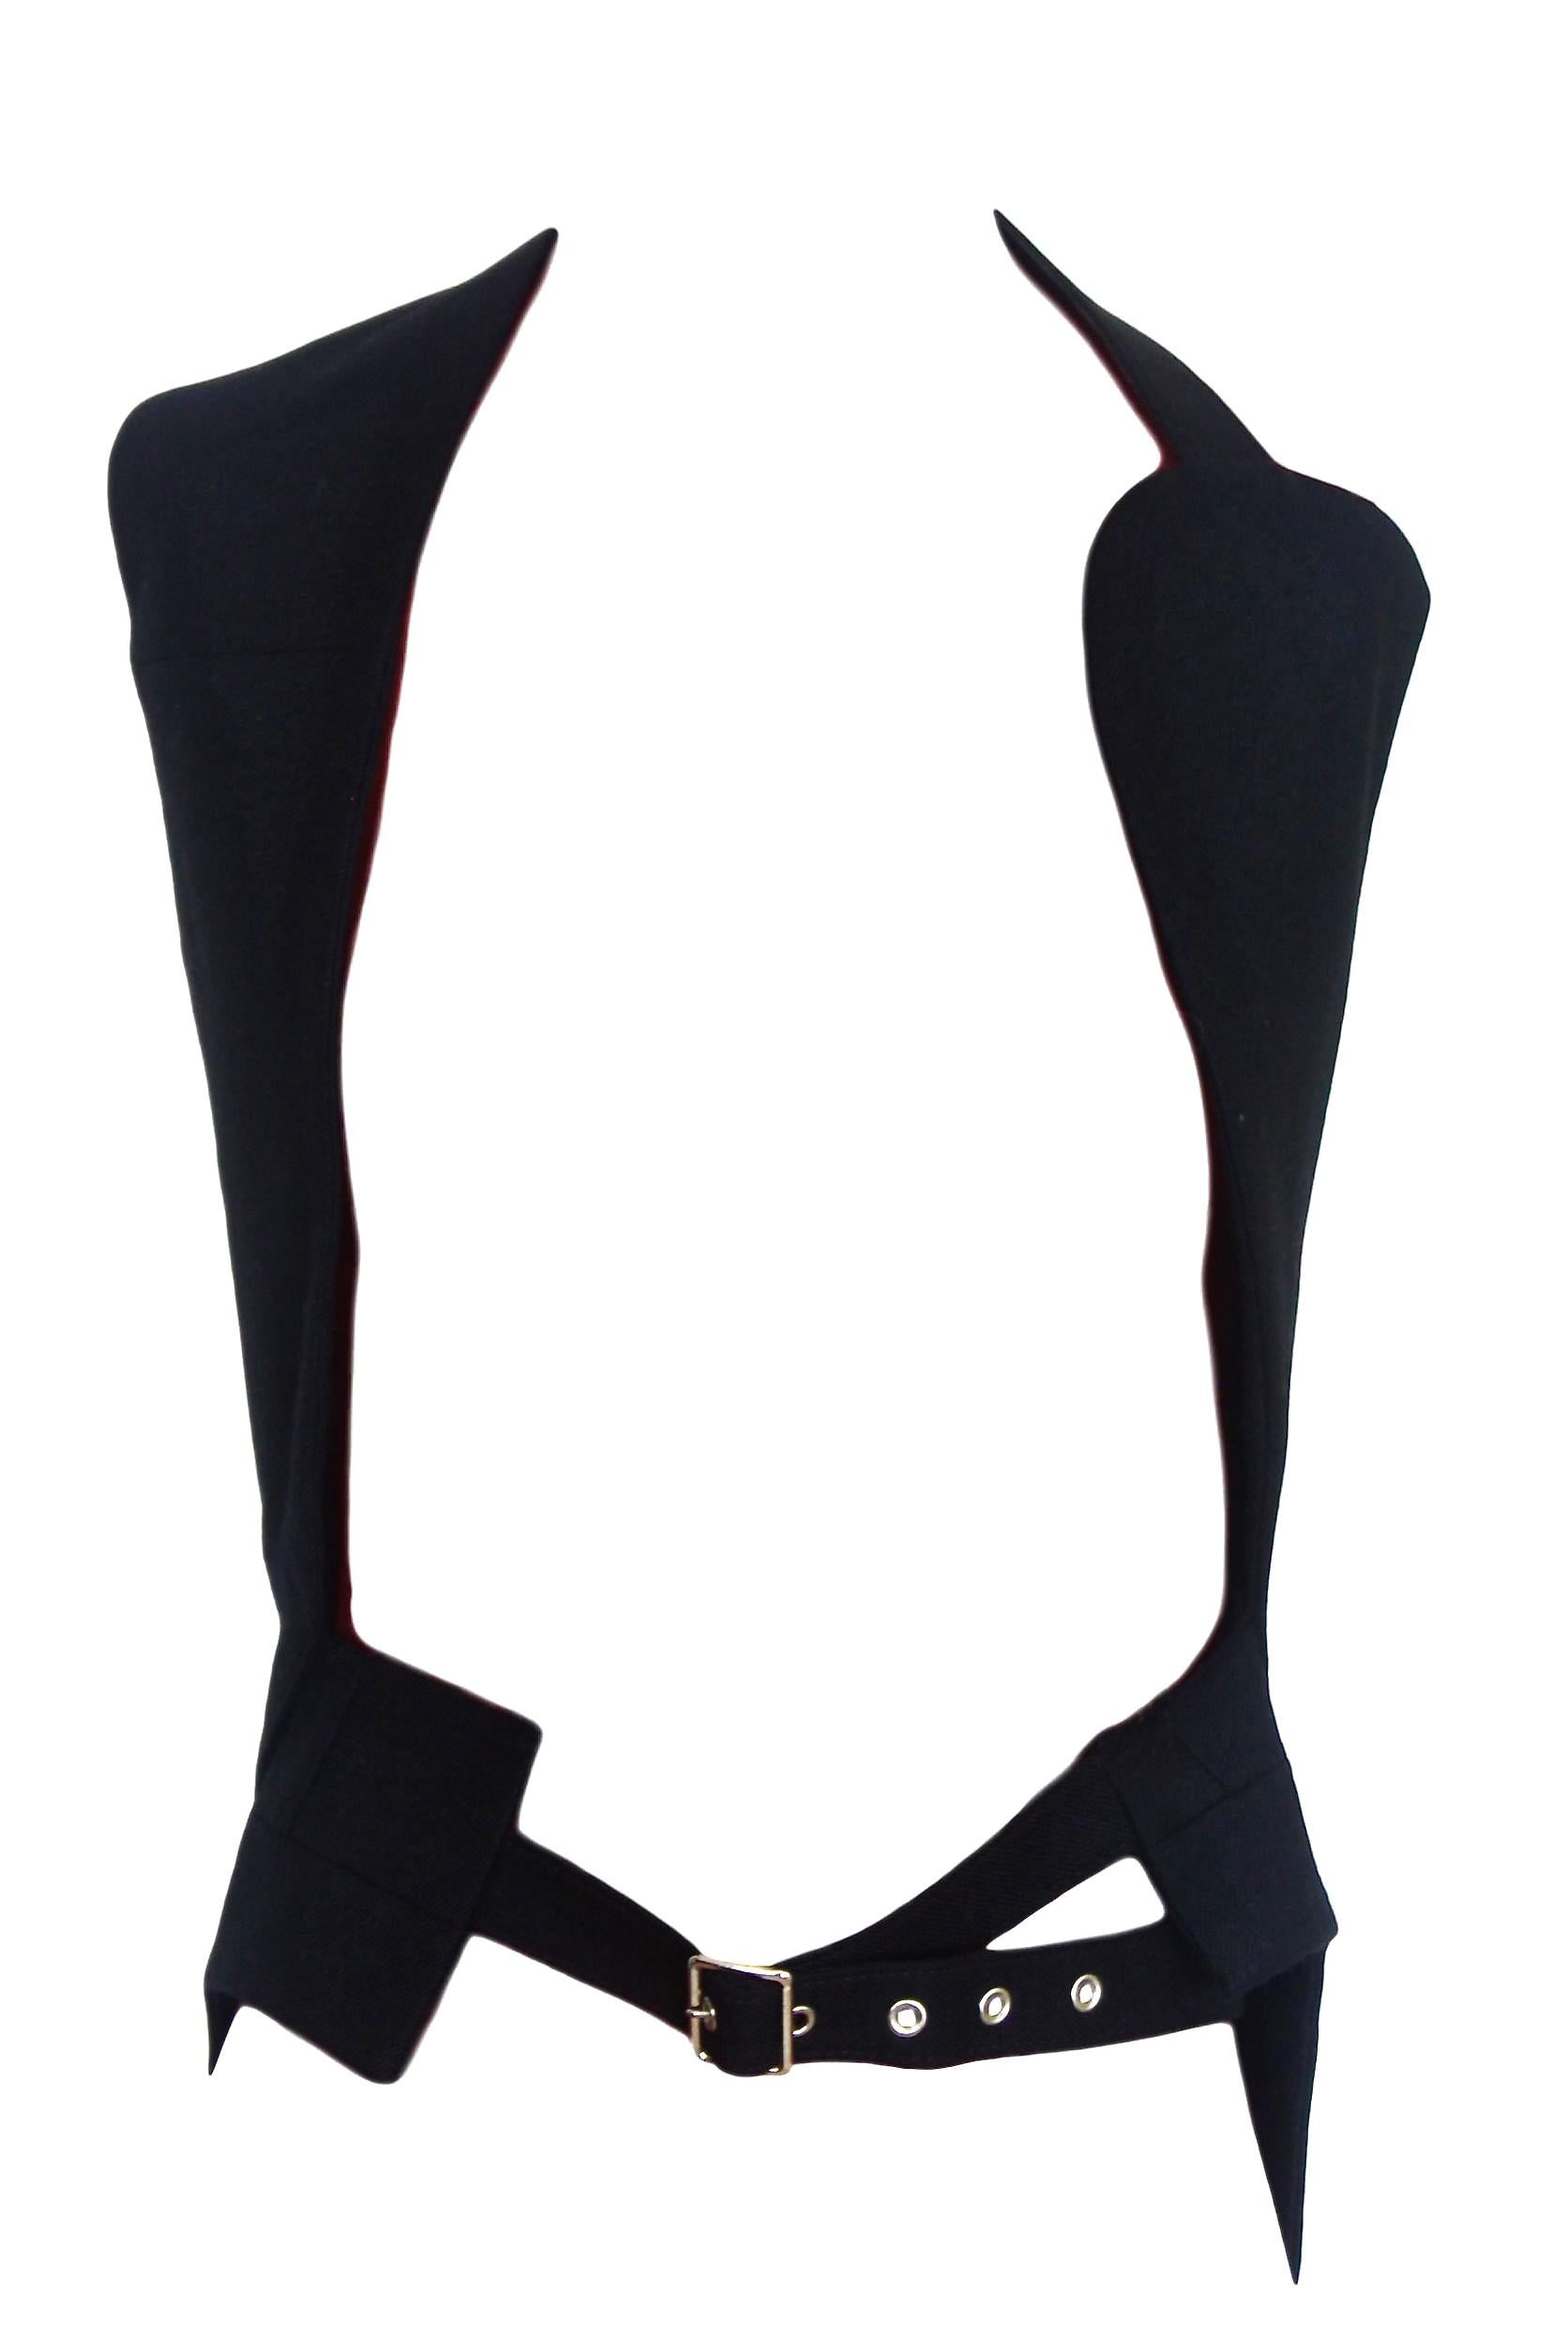 Comme des Garcons 2009 Collection Vest with Tails For Sale 5